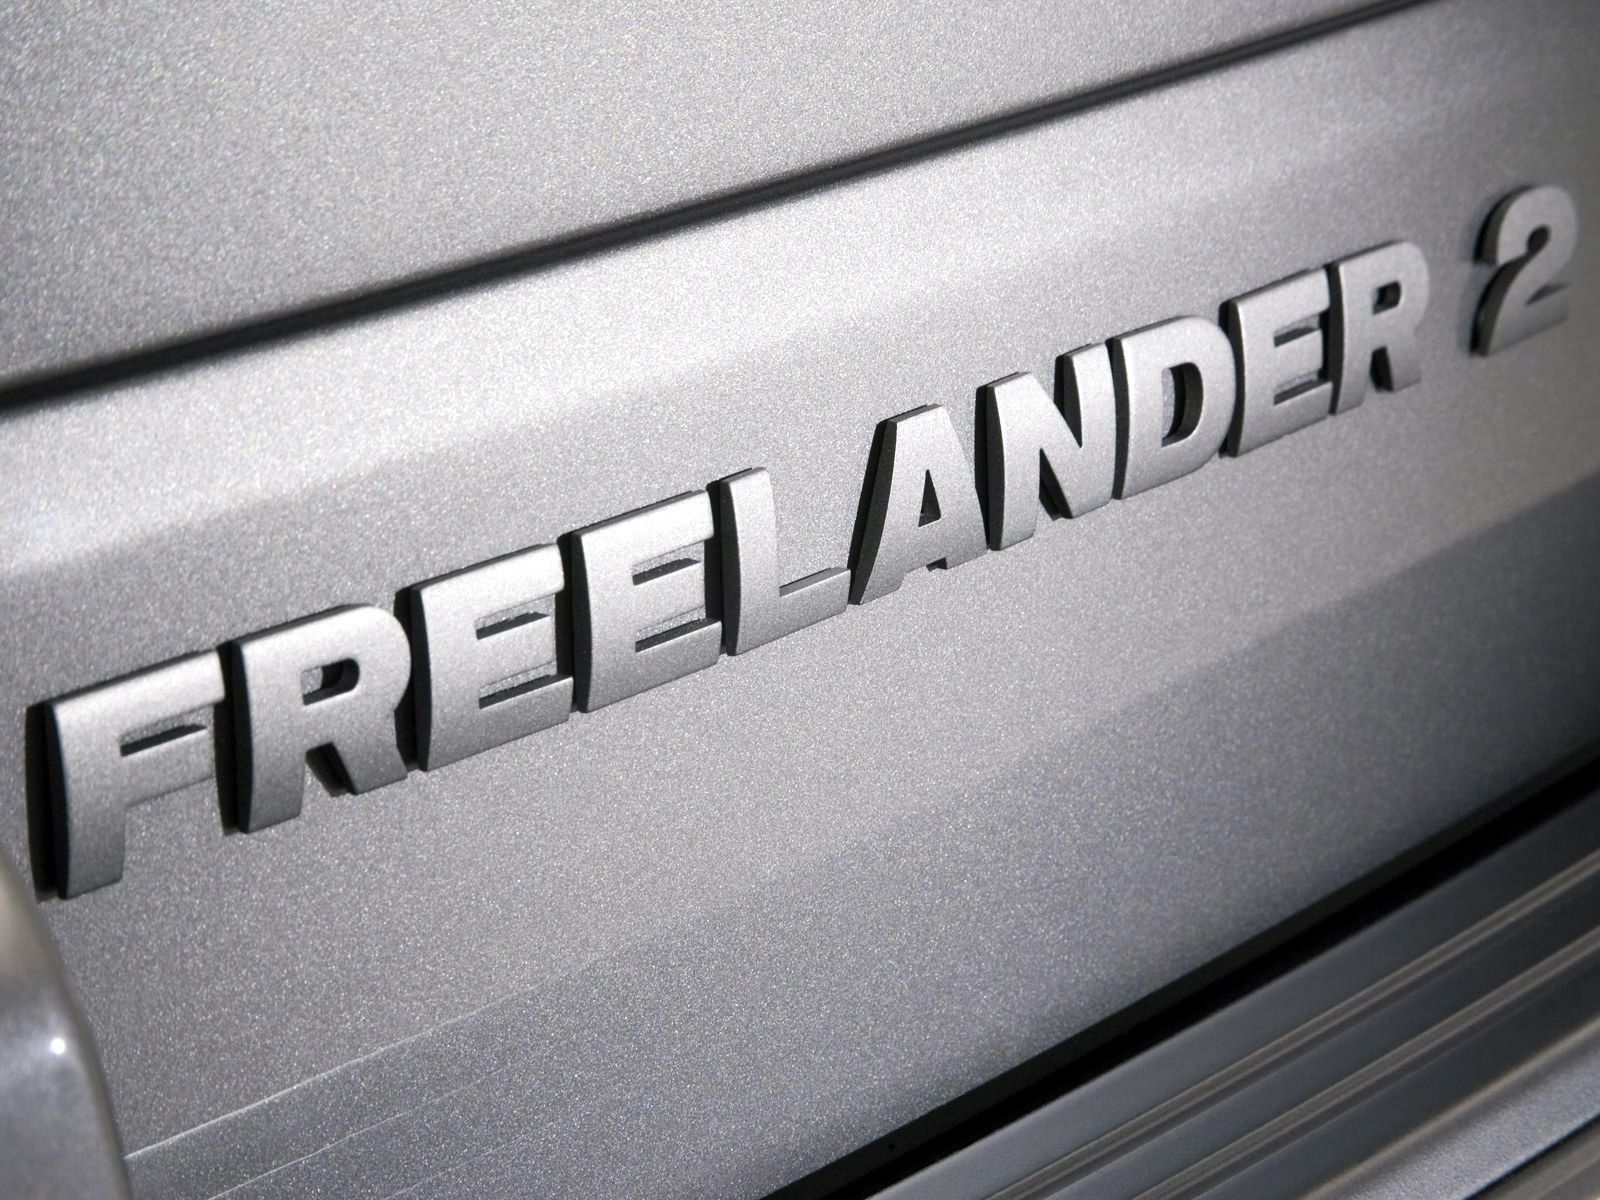 2006 Land Rover Freelander 2